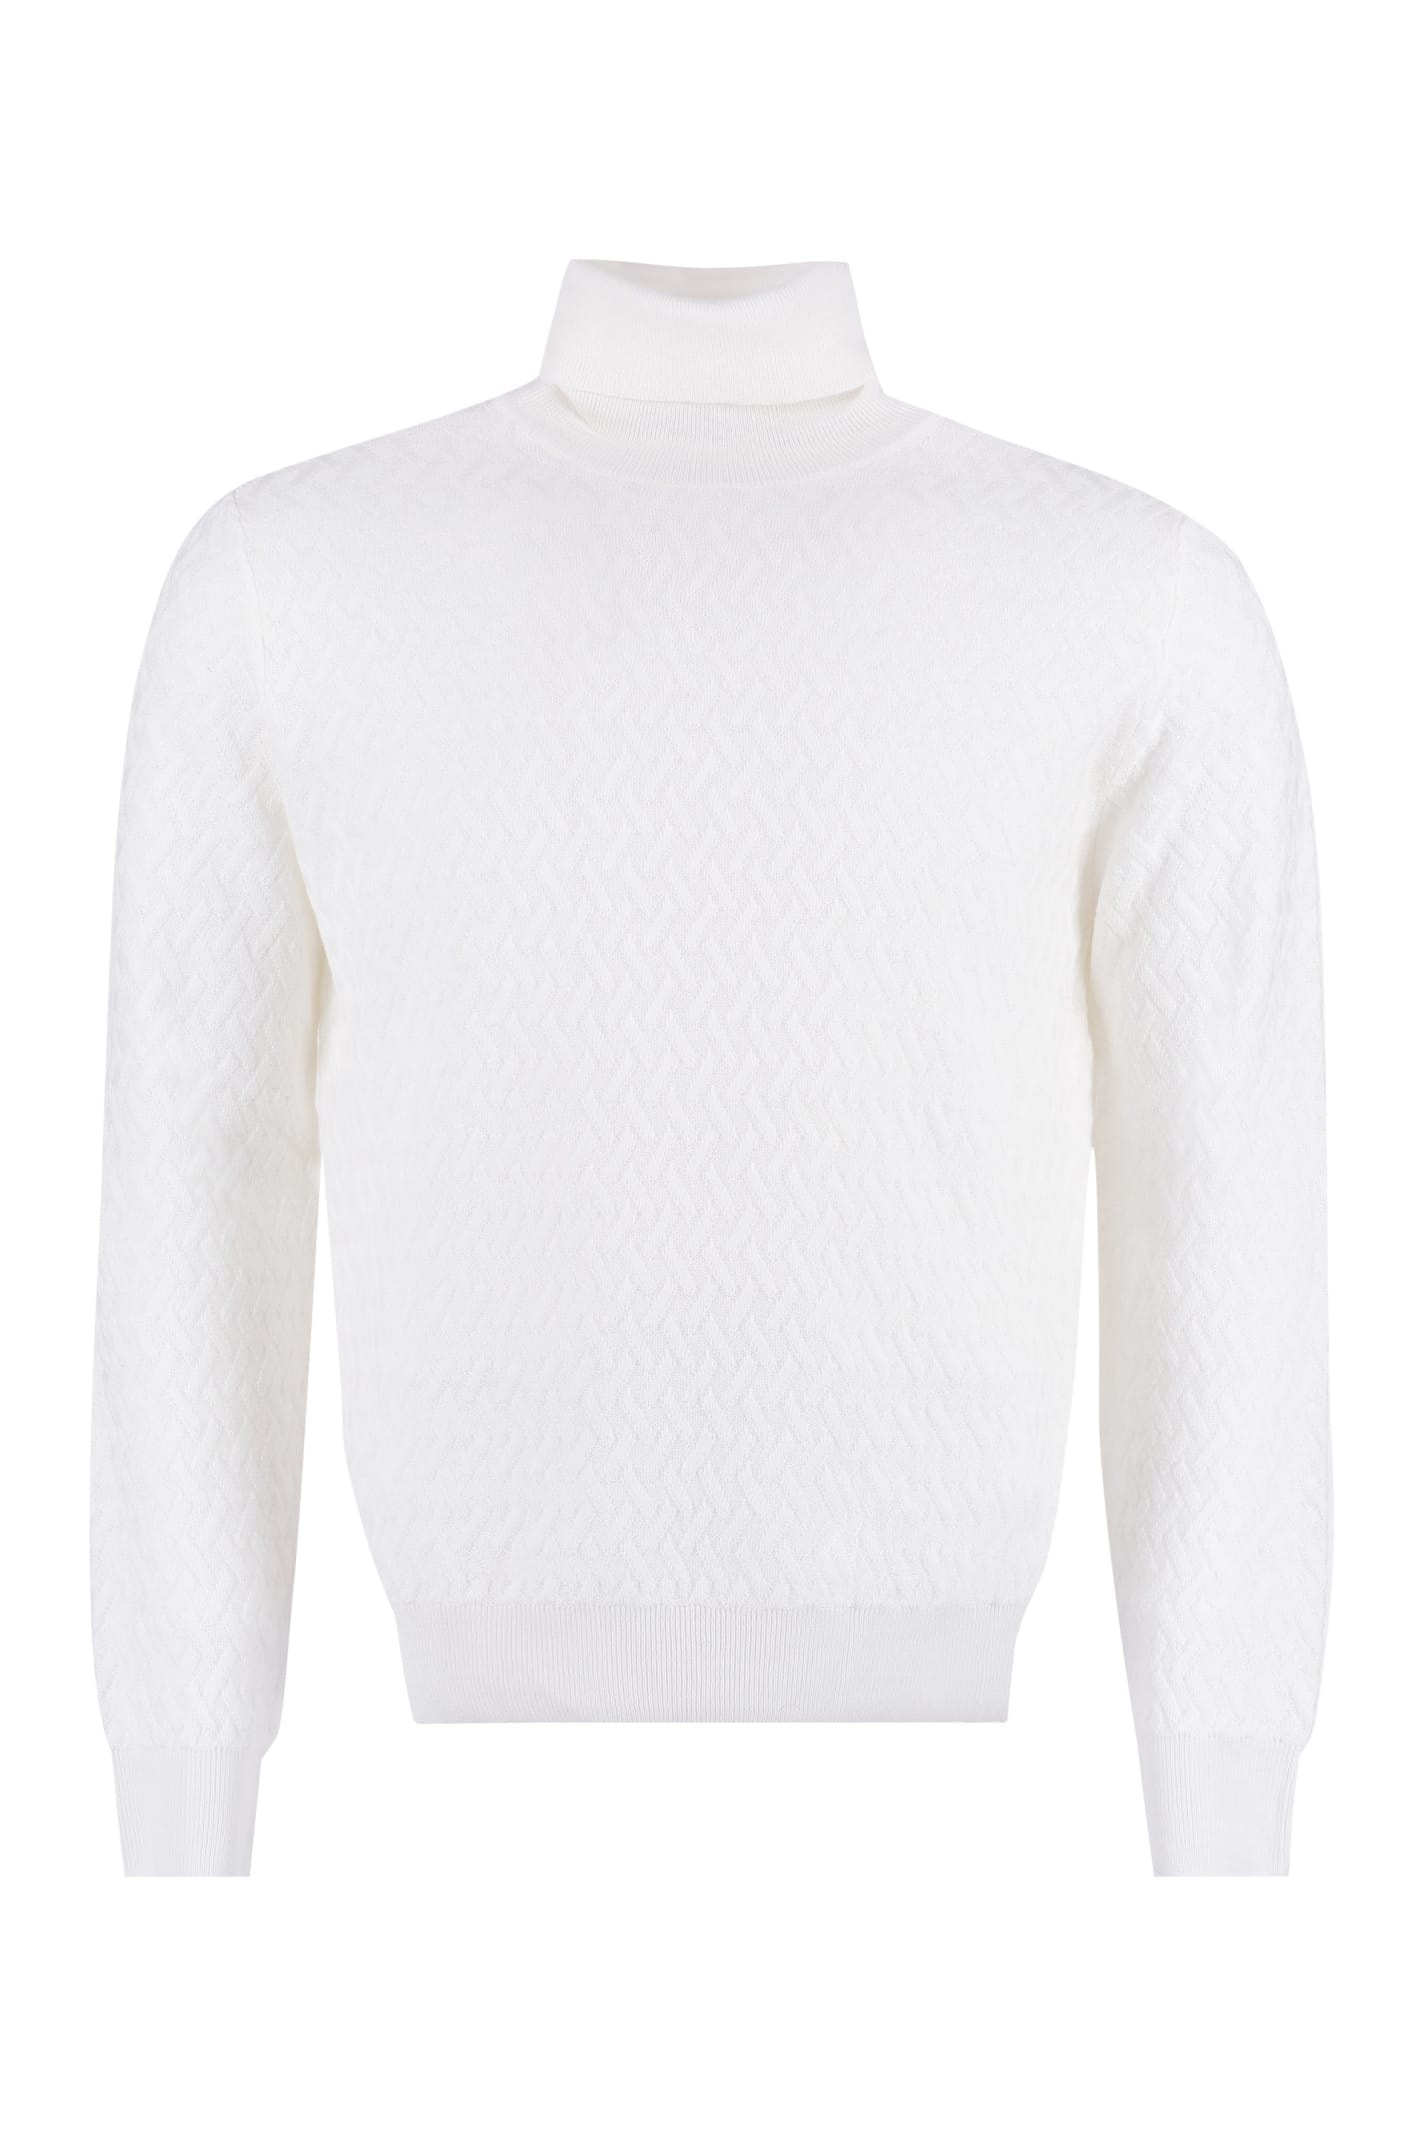 Canali Long Sleeve Wool Turtleneck Sweater